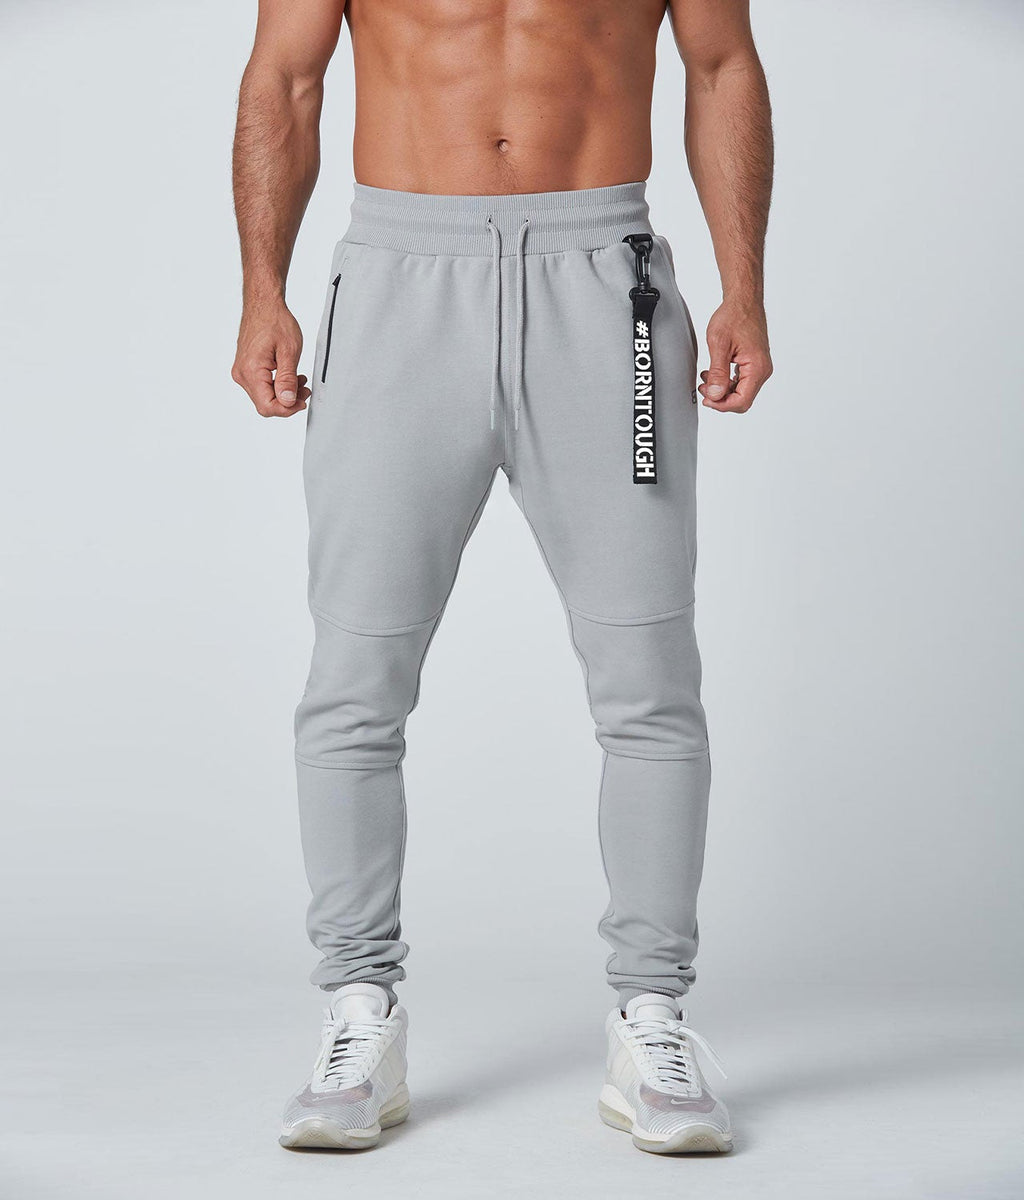 Born Tough Core Fit Zippered Gray Gym Workout Pant for Men - Born Tough